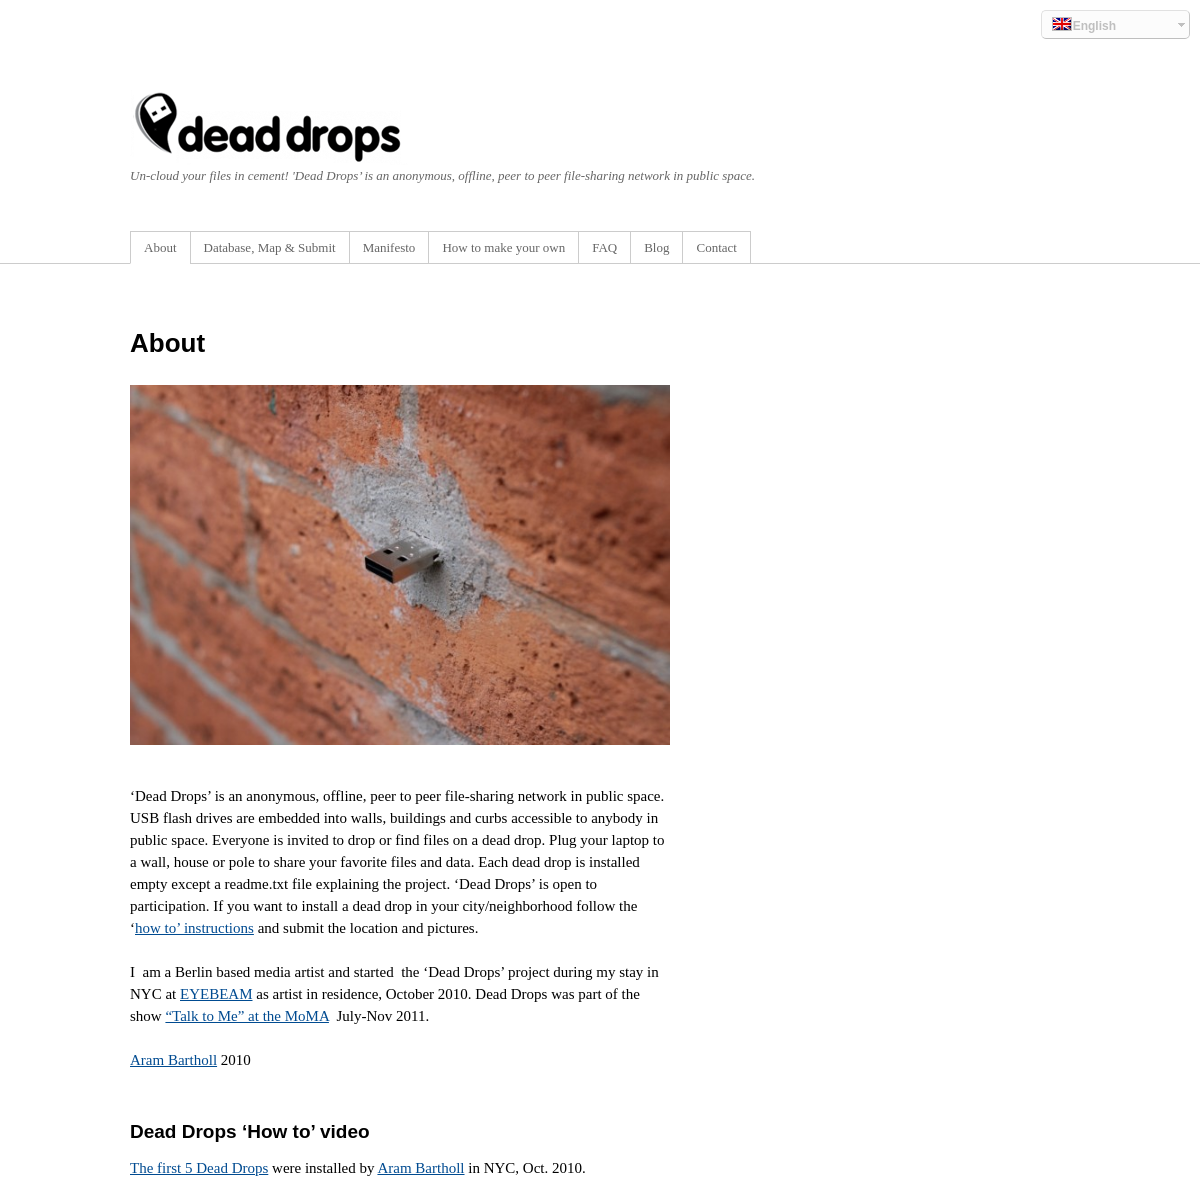 A complete backup of deaddrops.com